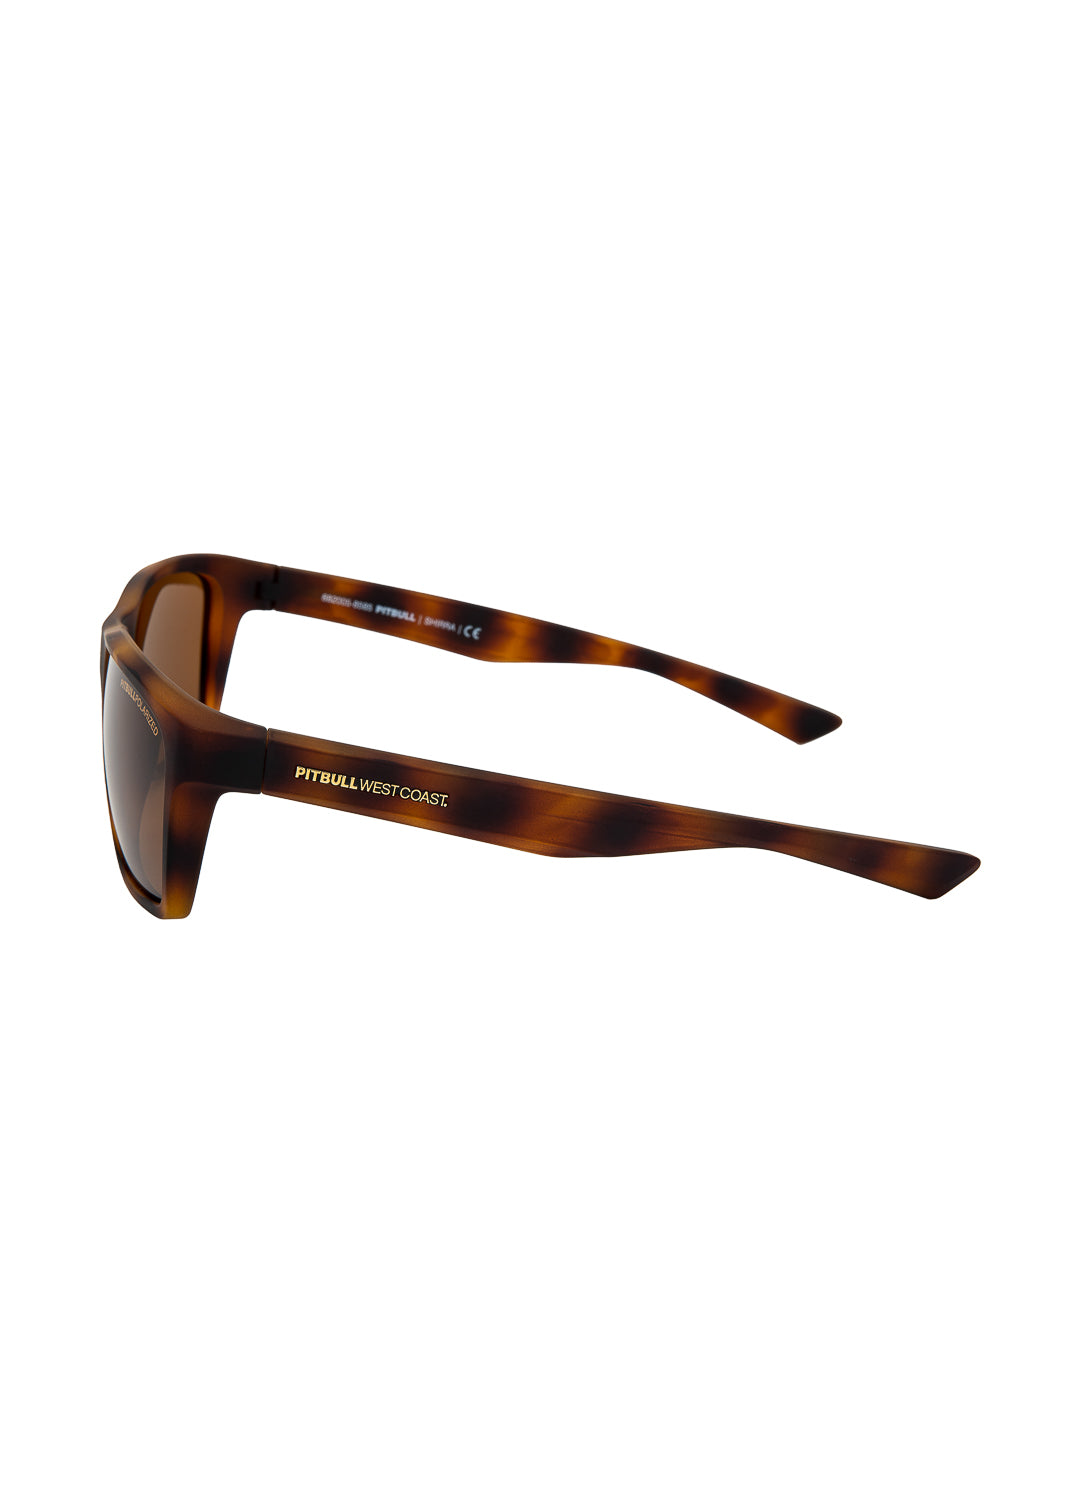 Sunglasses Brown SHIRRA.